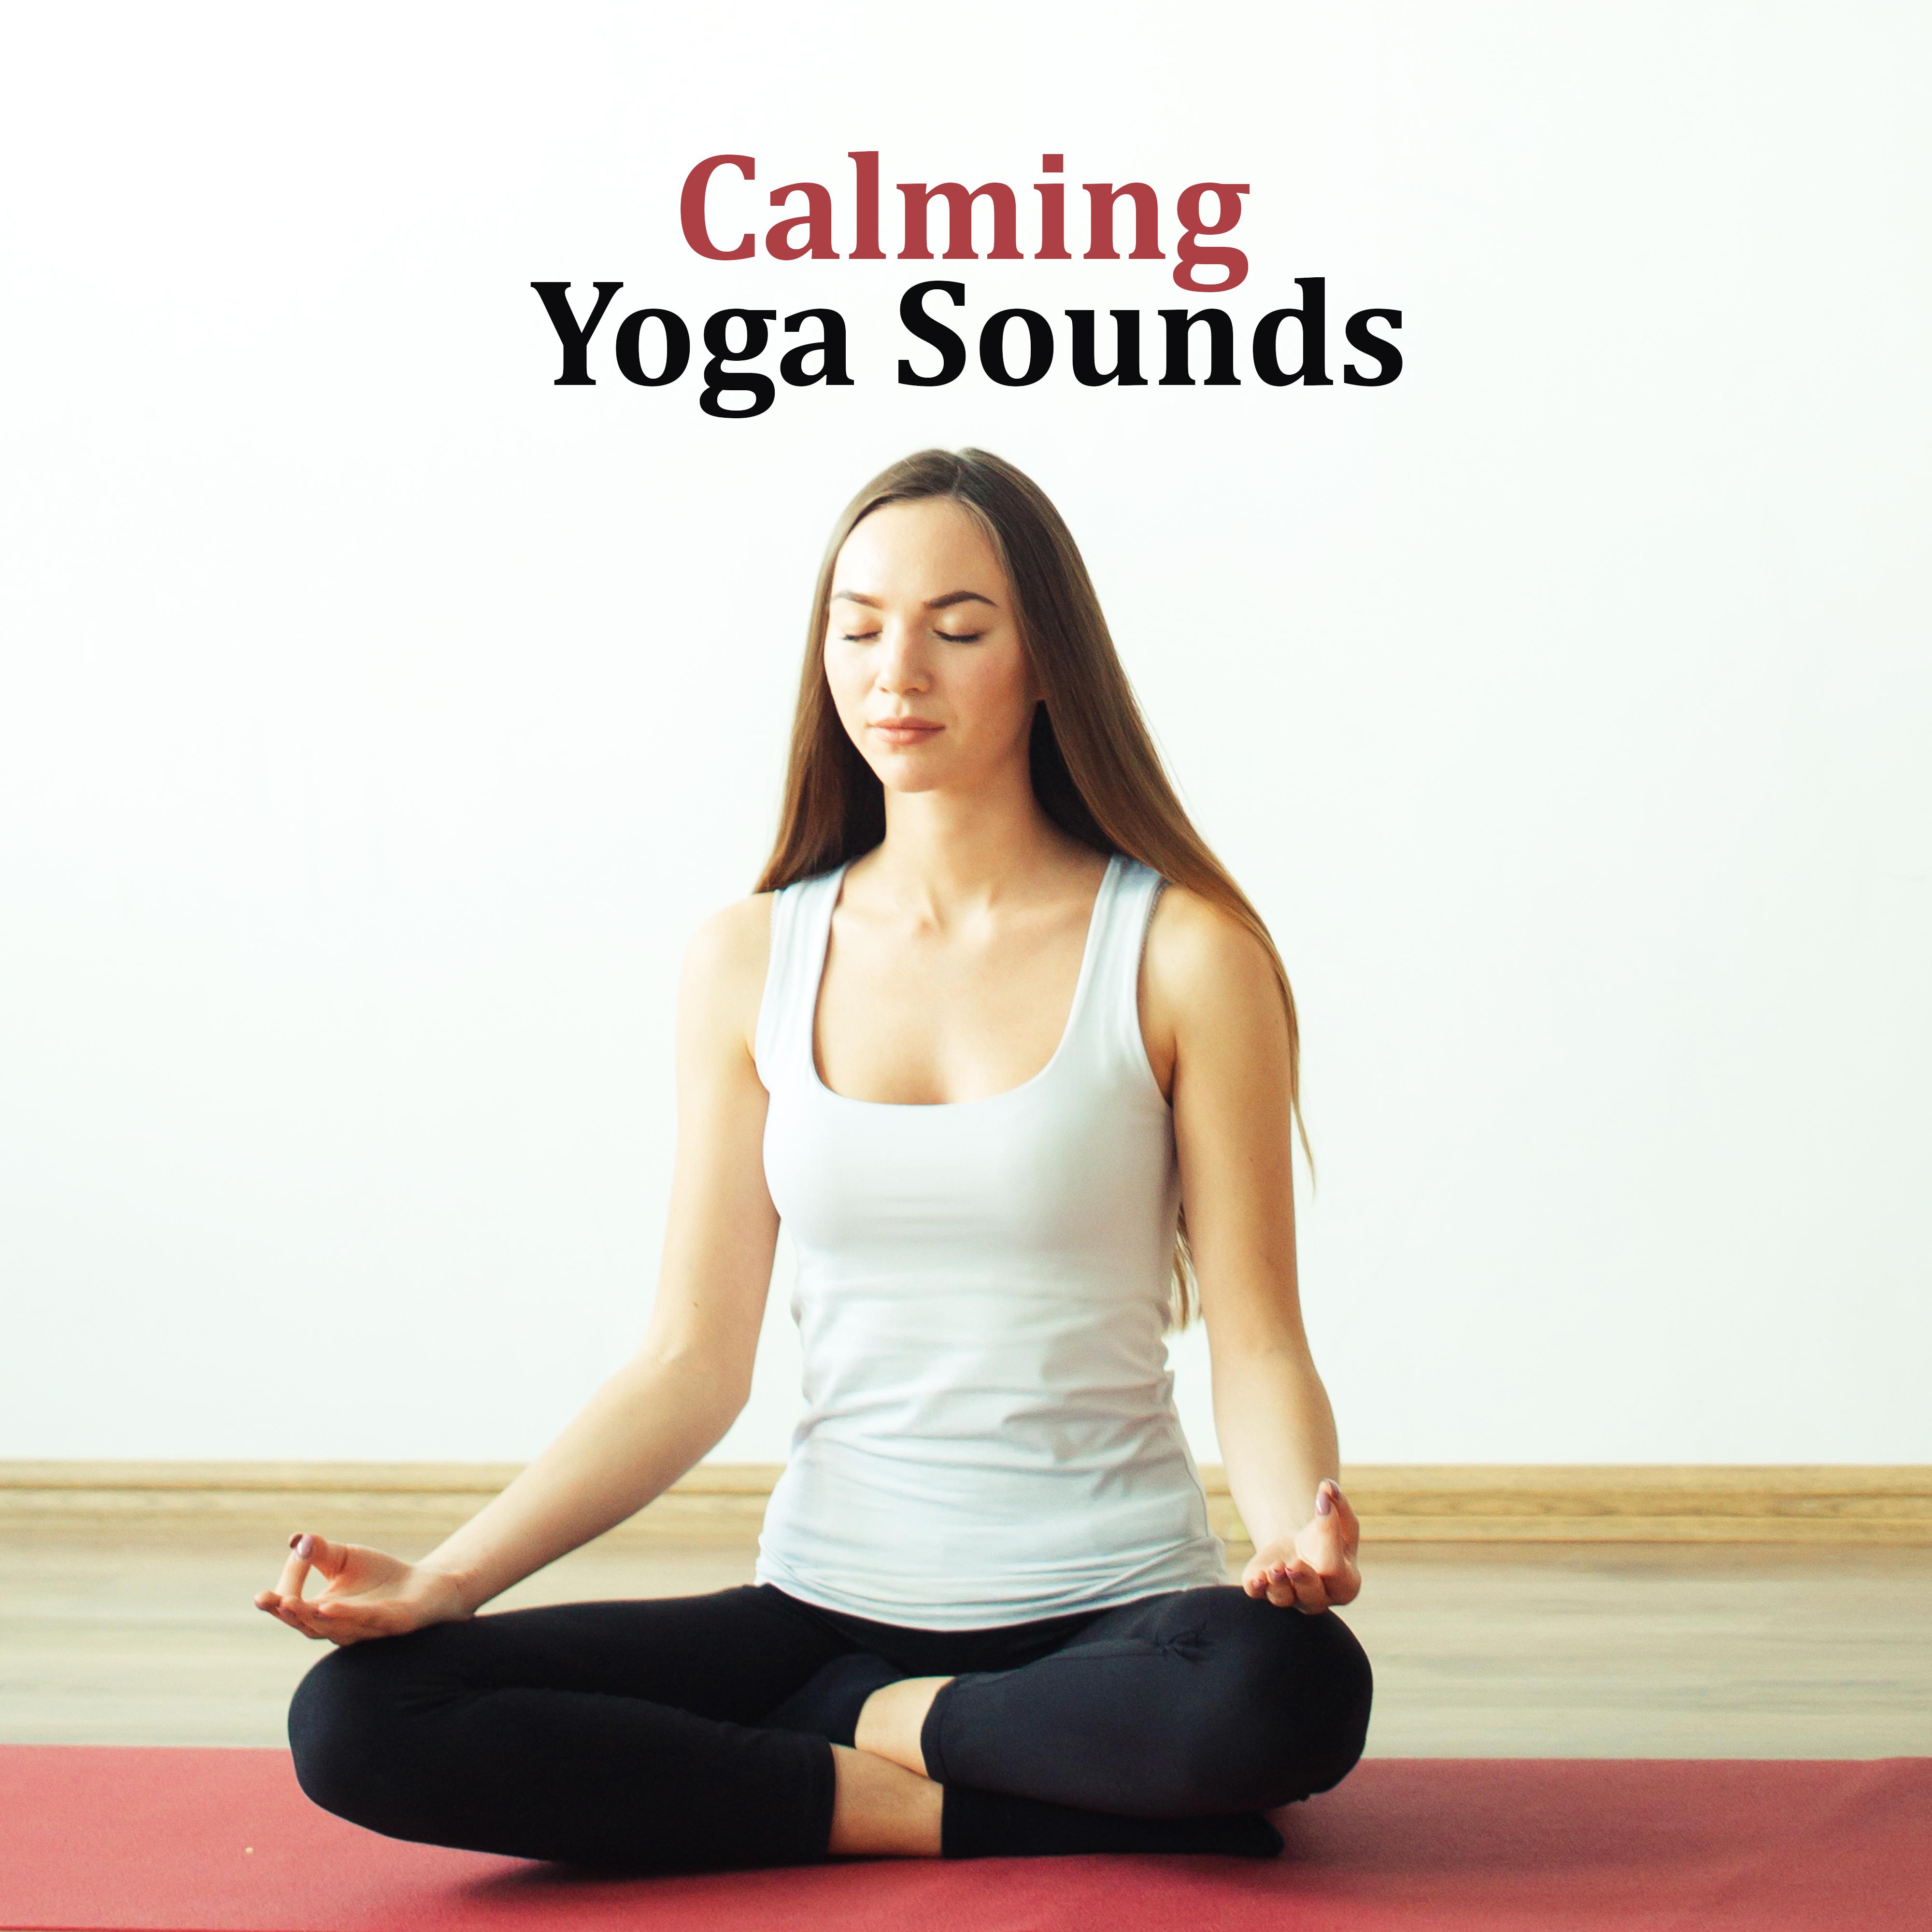 Calming Yoga Sounds